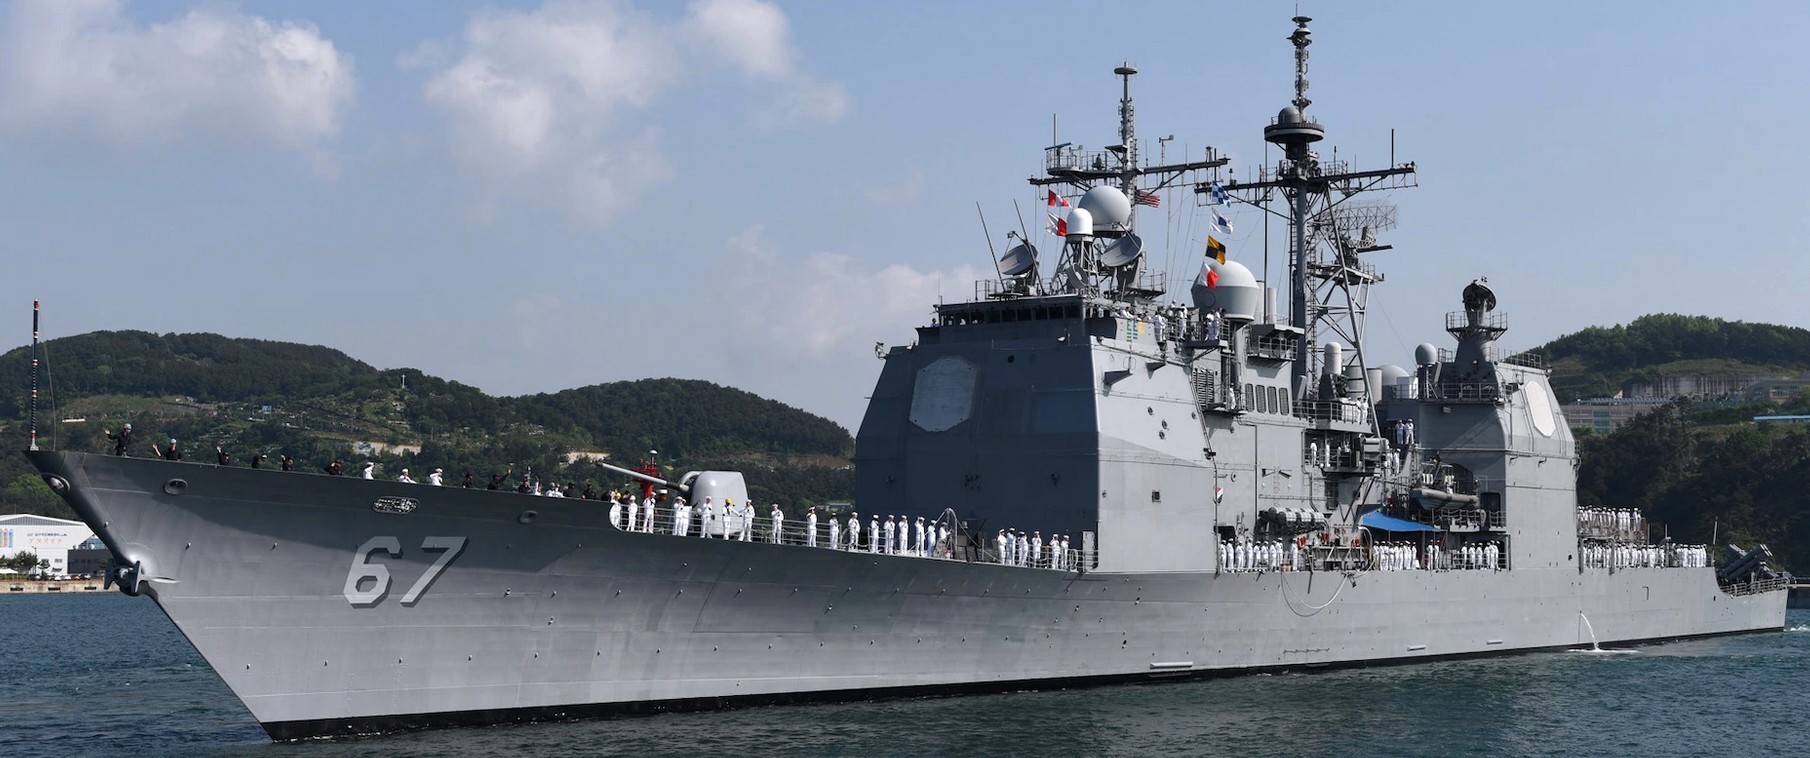 cg-67 uss shiloh ticonderoga class guided missile cruiser aegis us navy 82 fleet activities yokosuka japan 82